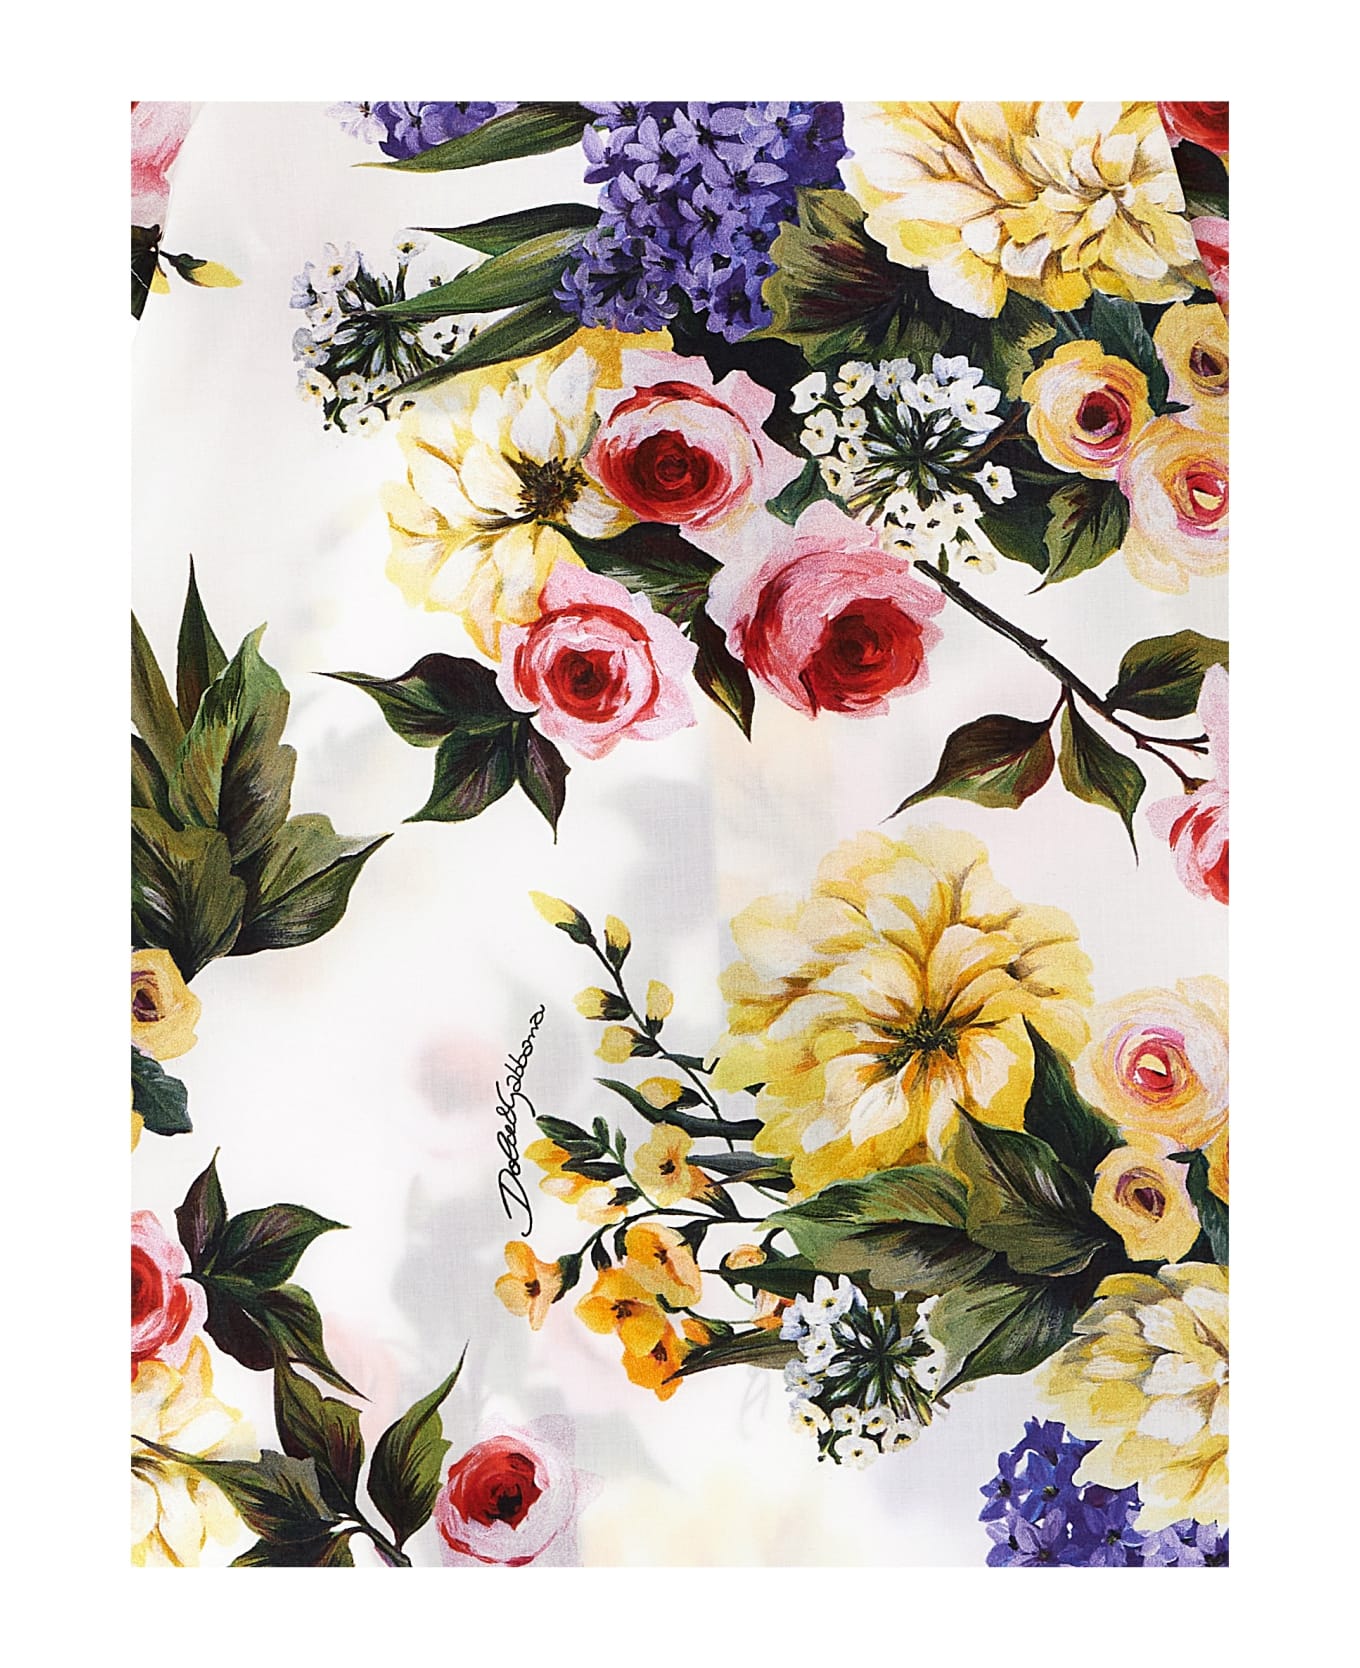 Dolce & Gabbana Floral Printed Dress - Multicolor ワンピース＆ドレス